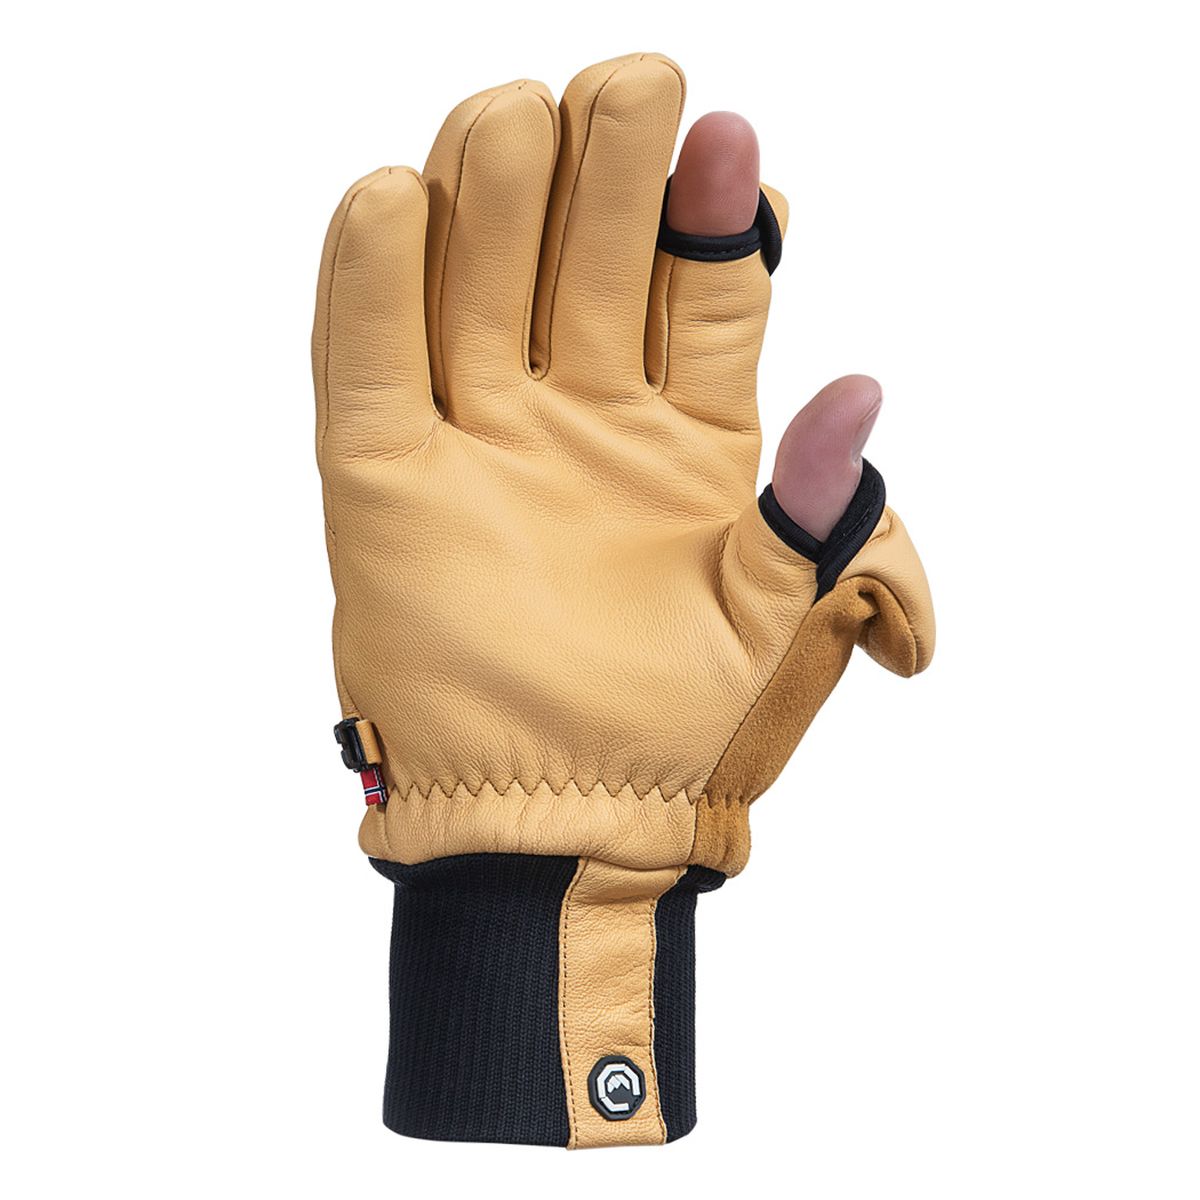 Vallerret Hatchet Leather Glove Natural, Leder-Fotohandschuhe XL - Hellbraun